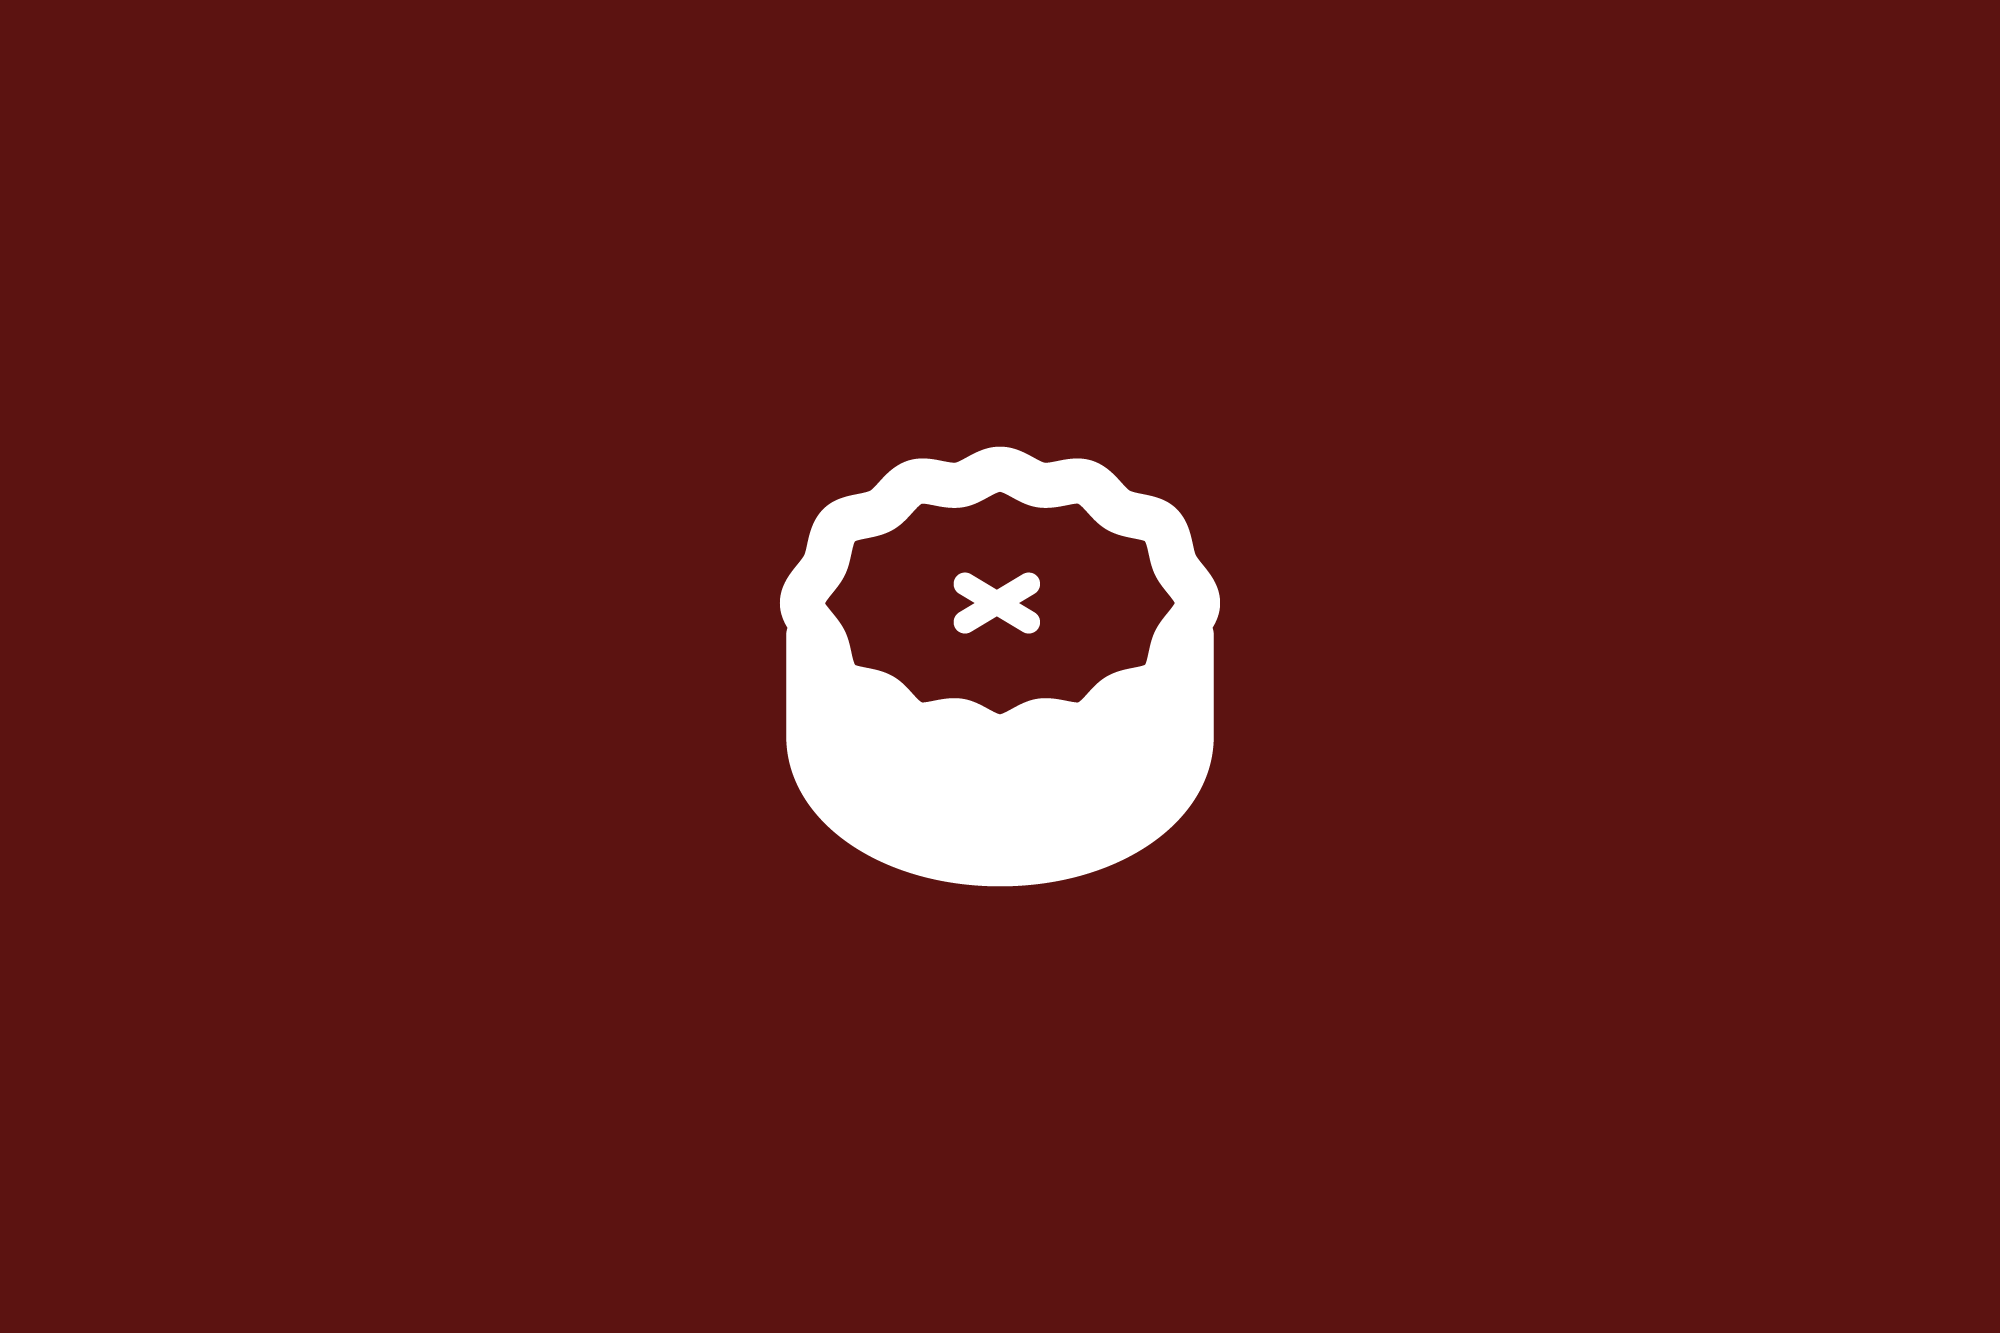 stephensons-pies-logo.png